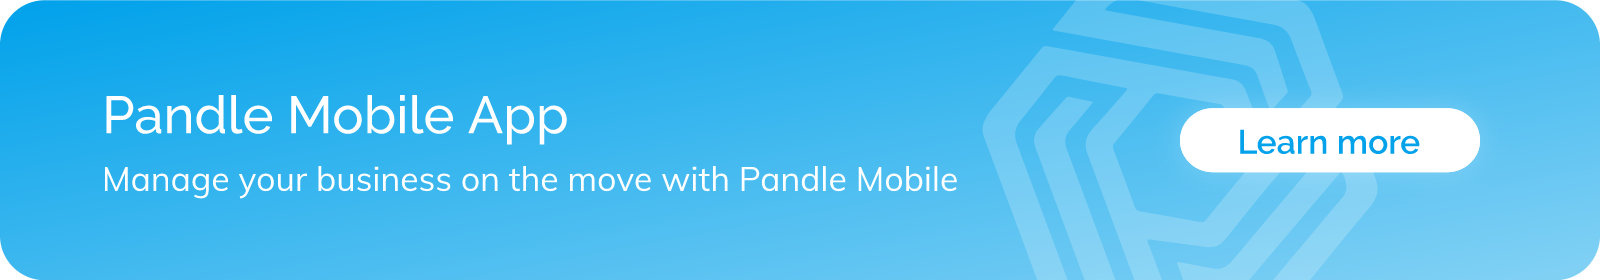 Pandle Mobile App